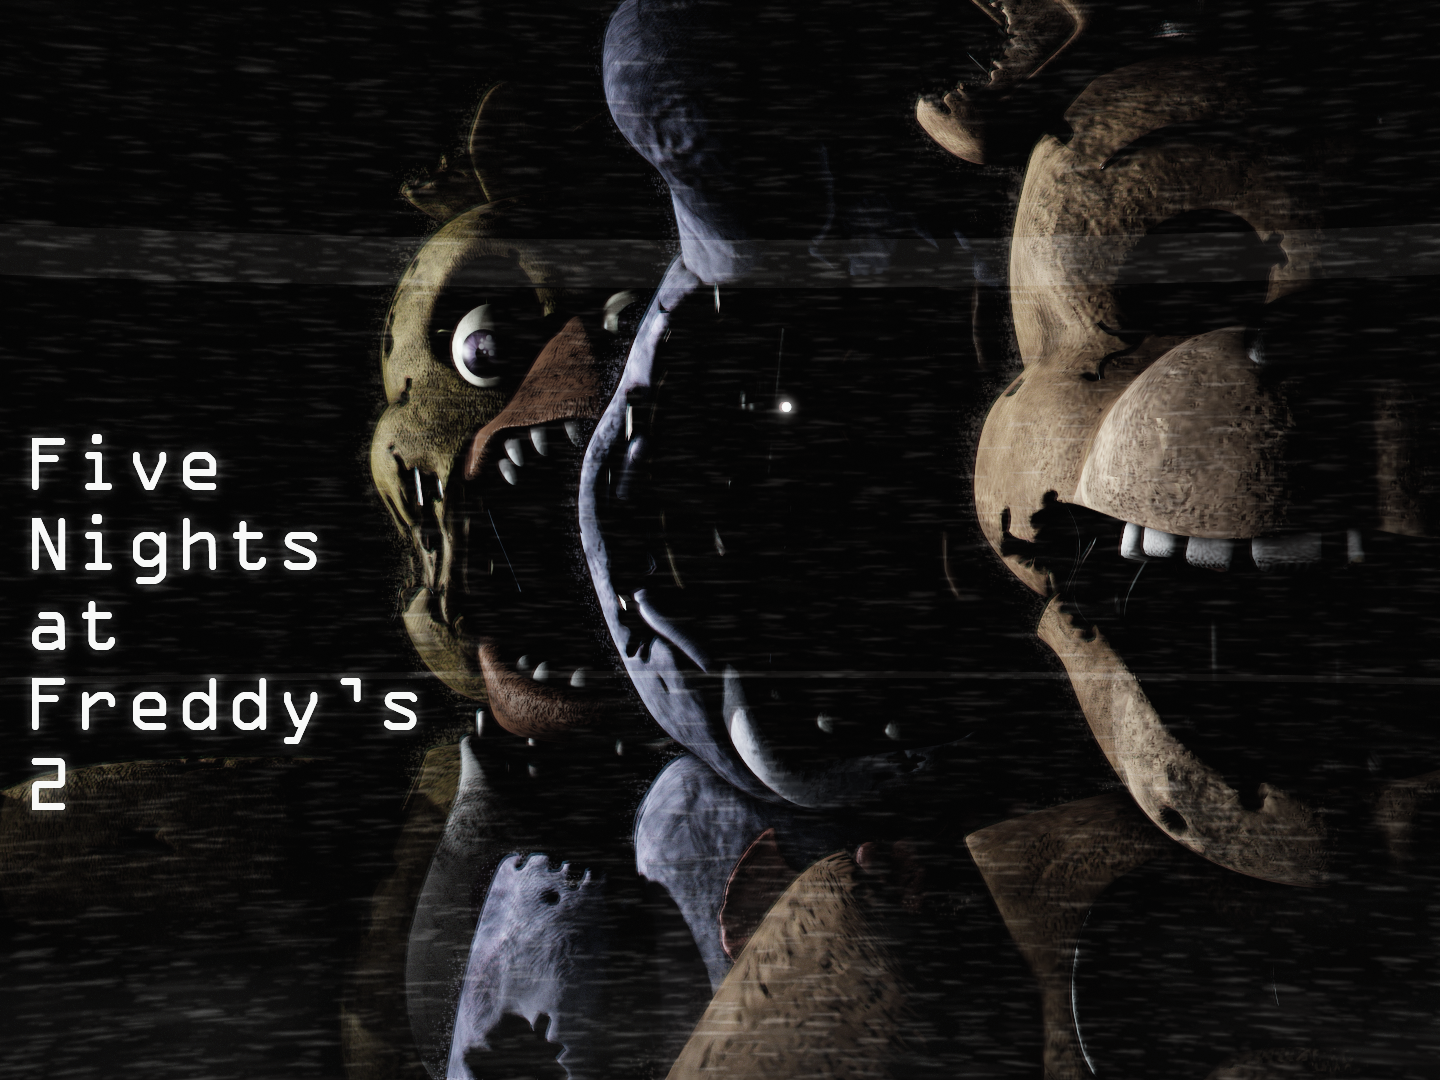 Файф найтс фредди. Пять ночей с Фредди 2 меню. Five Nights at Freddy's 2 Фредди. Фредди из Five Nights at Freddy. Меню ФНАФ 1 Фредди.